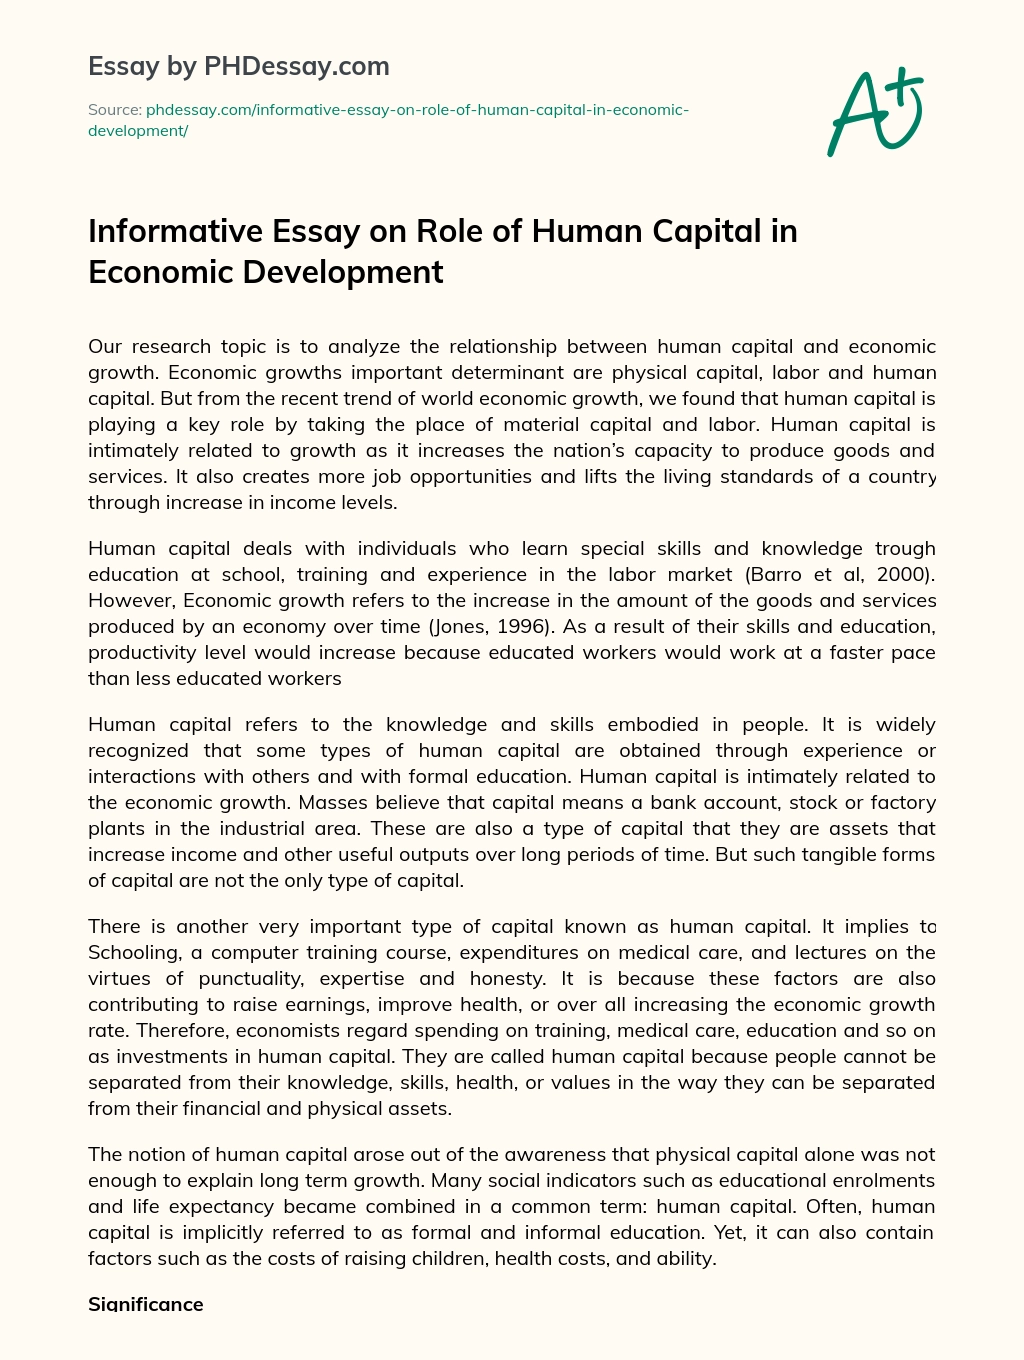 Informative Essay on Role of Human Capital in Economic Development essay